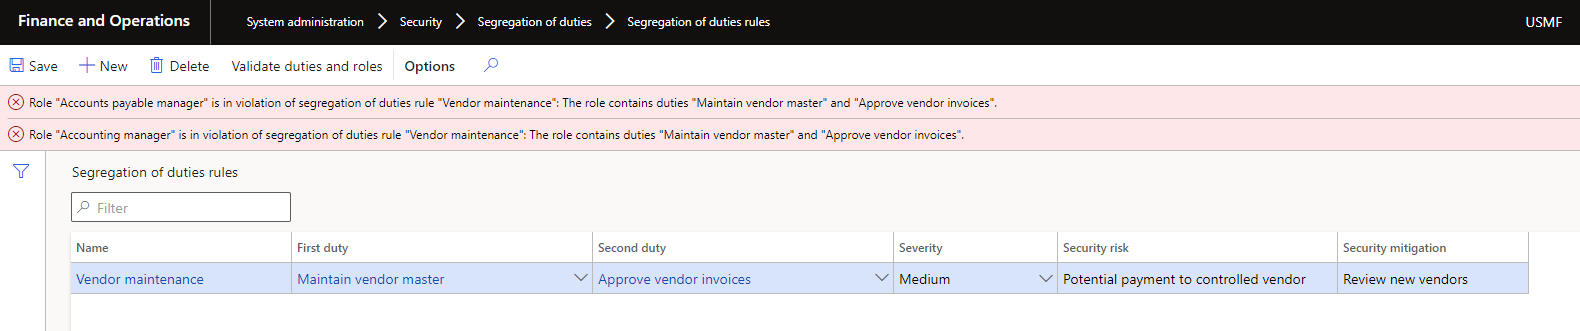 segregation of duties rules